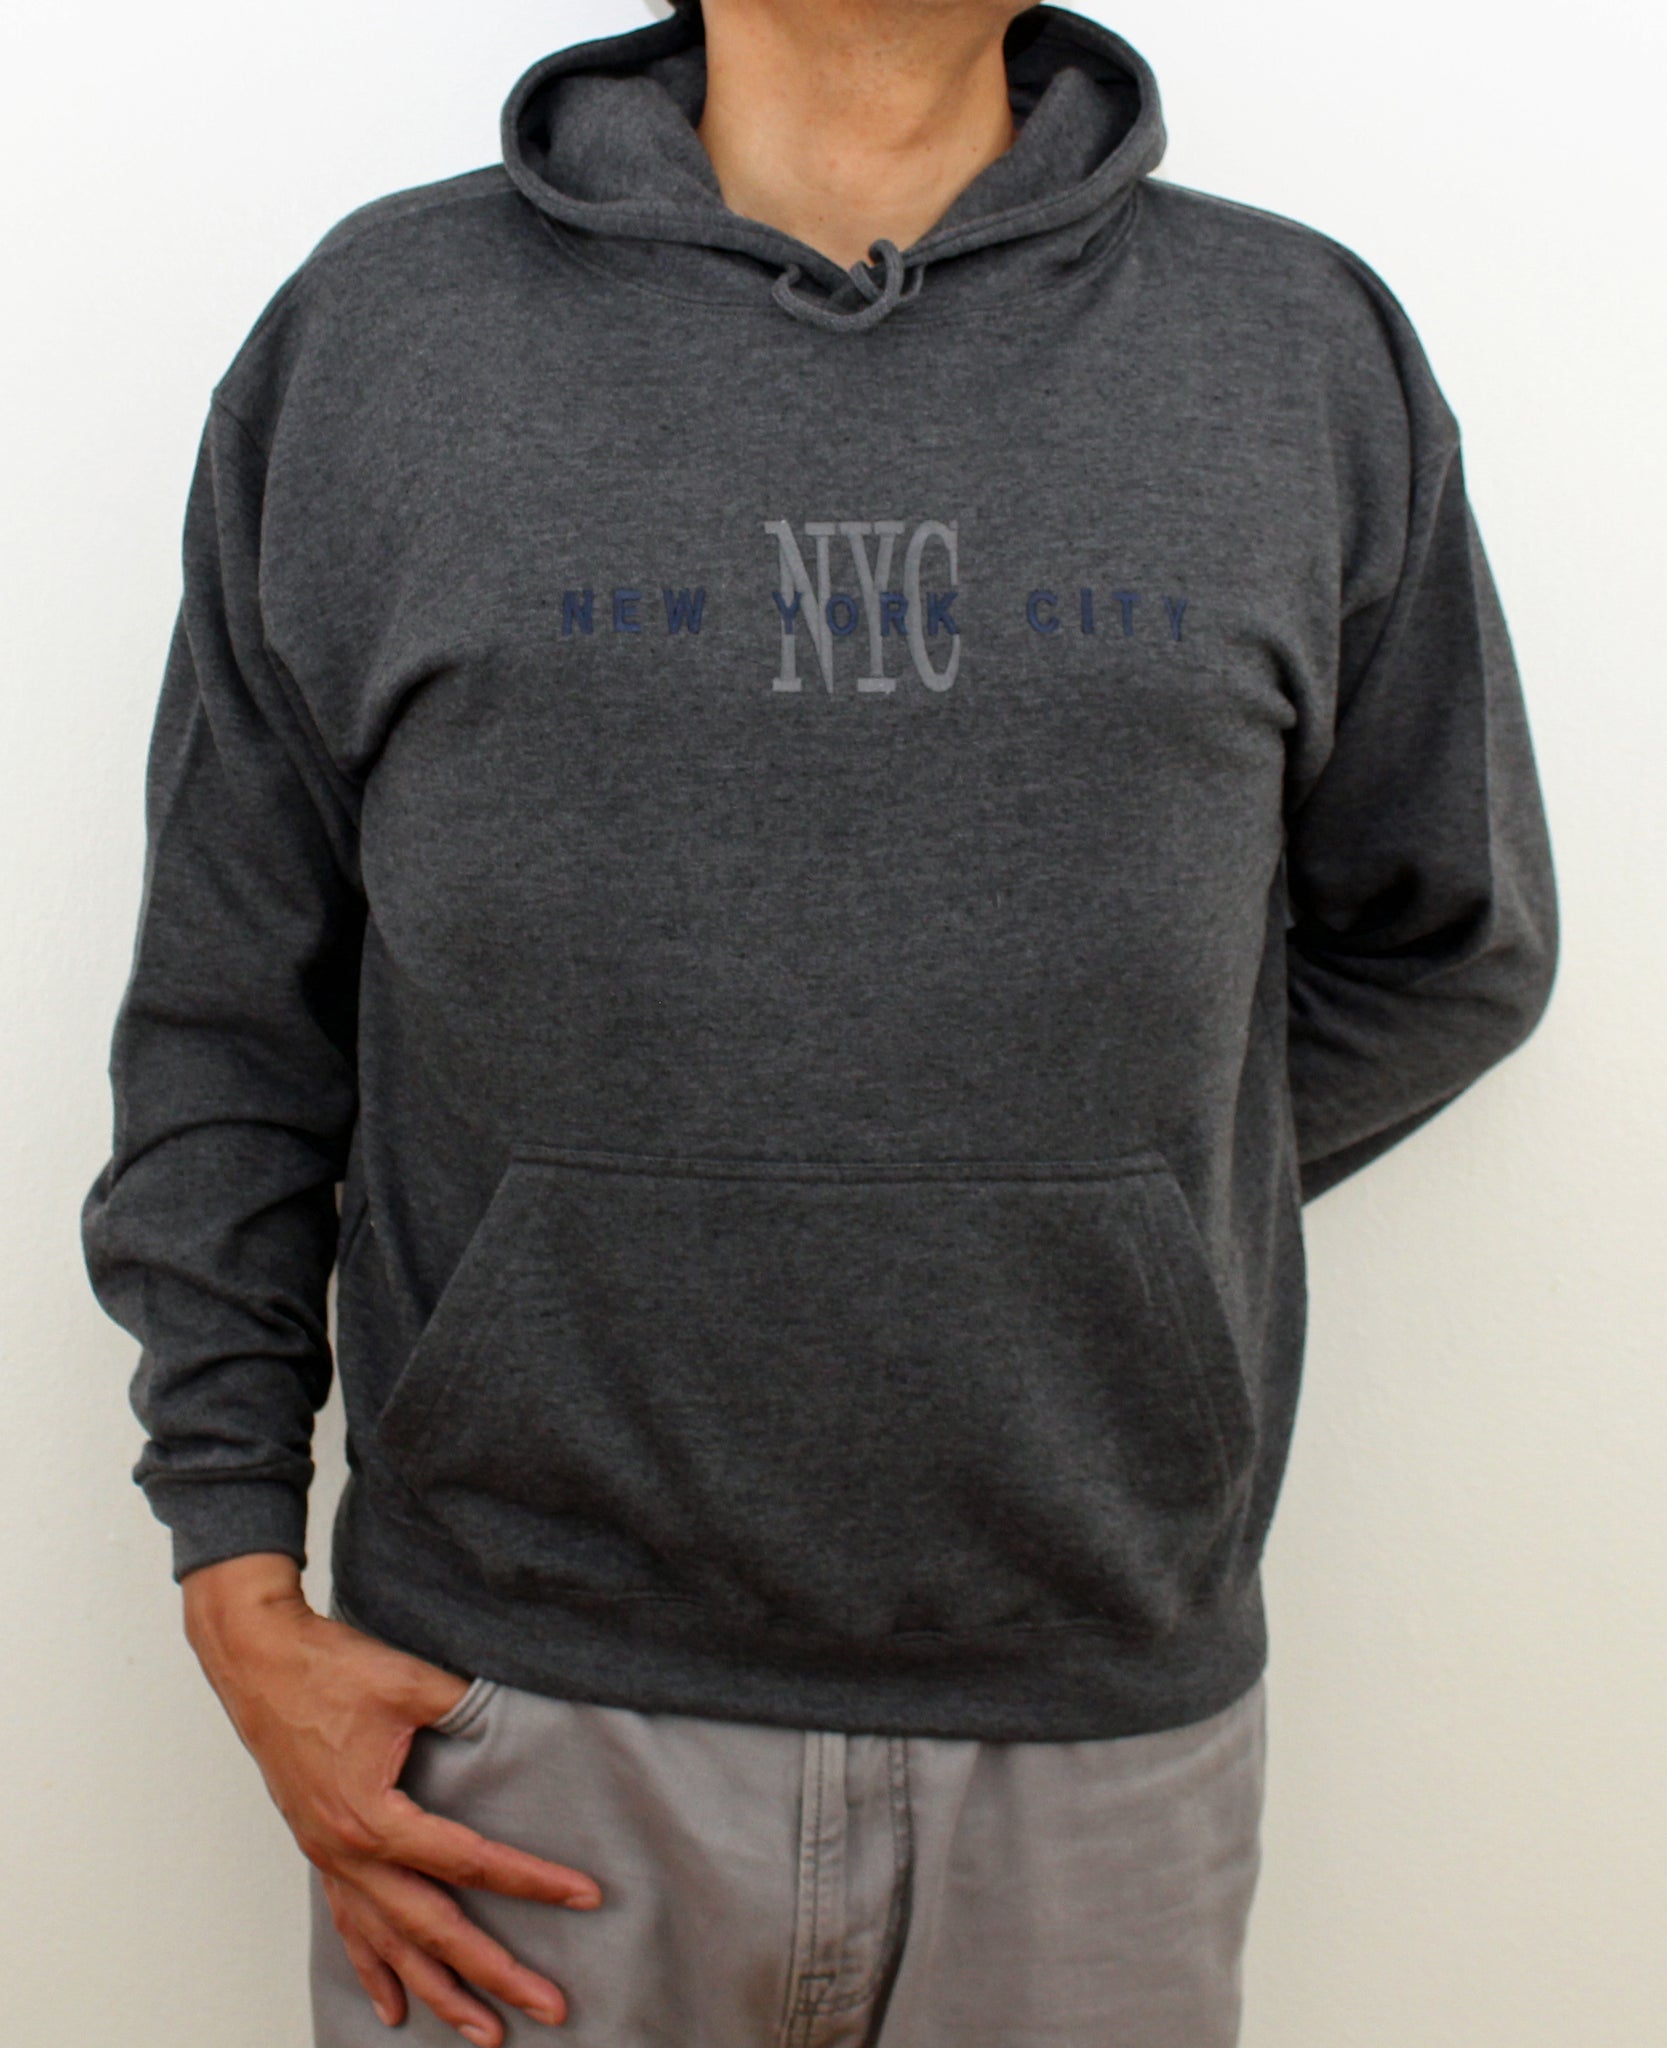 Adult Hoodies Embroidered with NEW YORK CITY – WALI USA INC